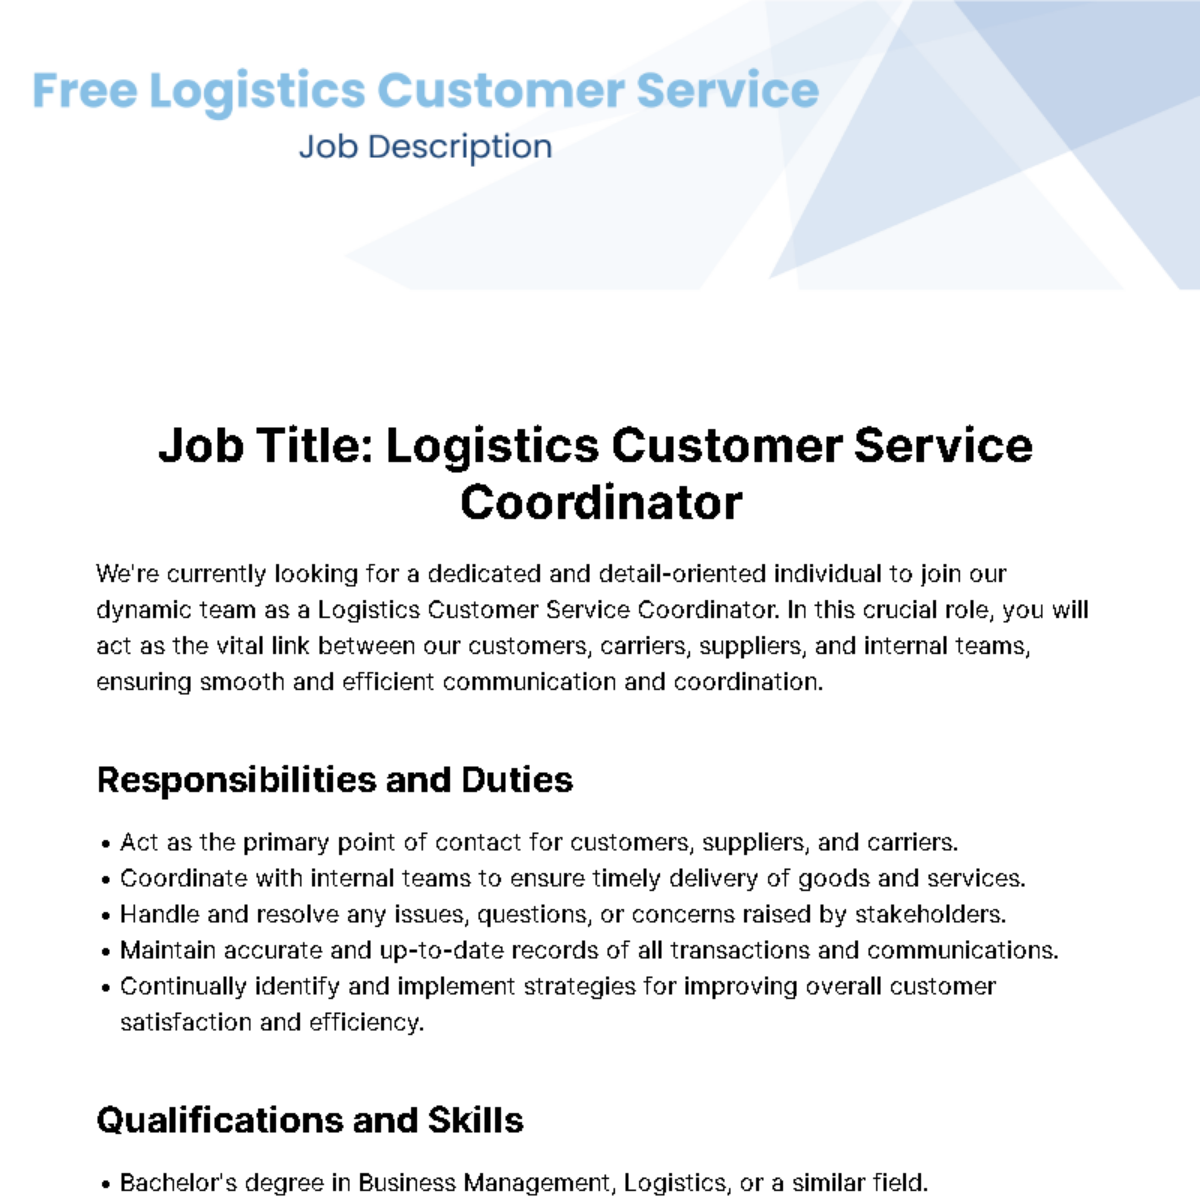 Free Logistics Customer Service Job Description Template